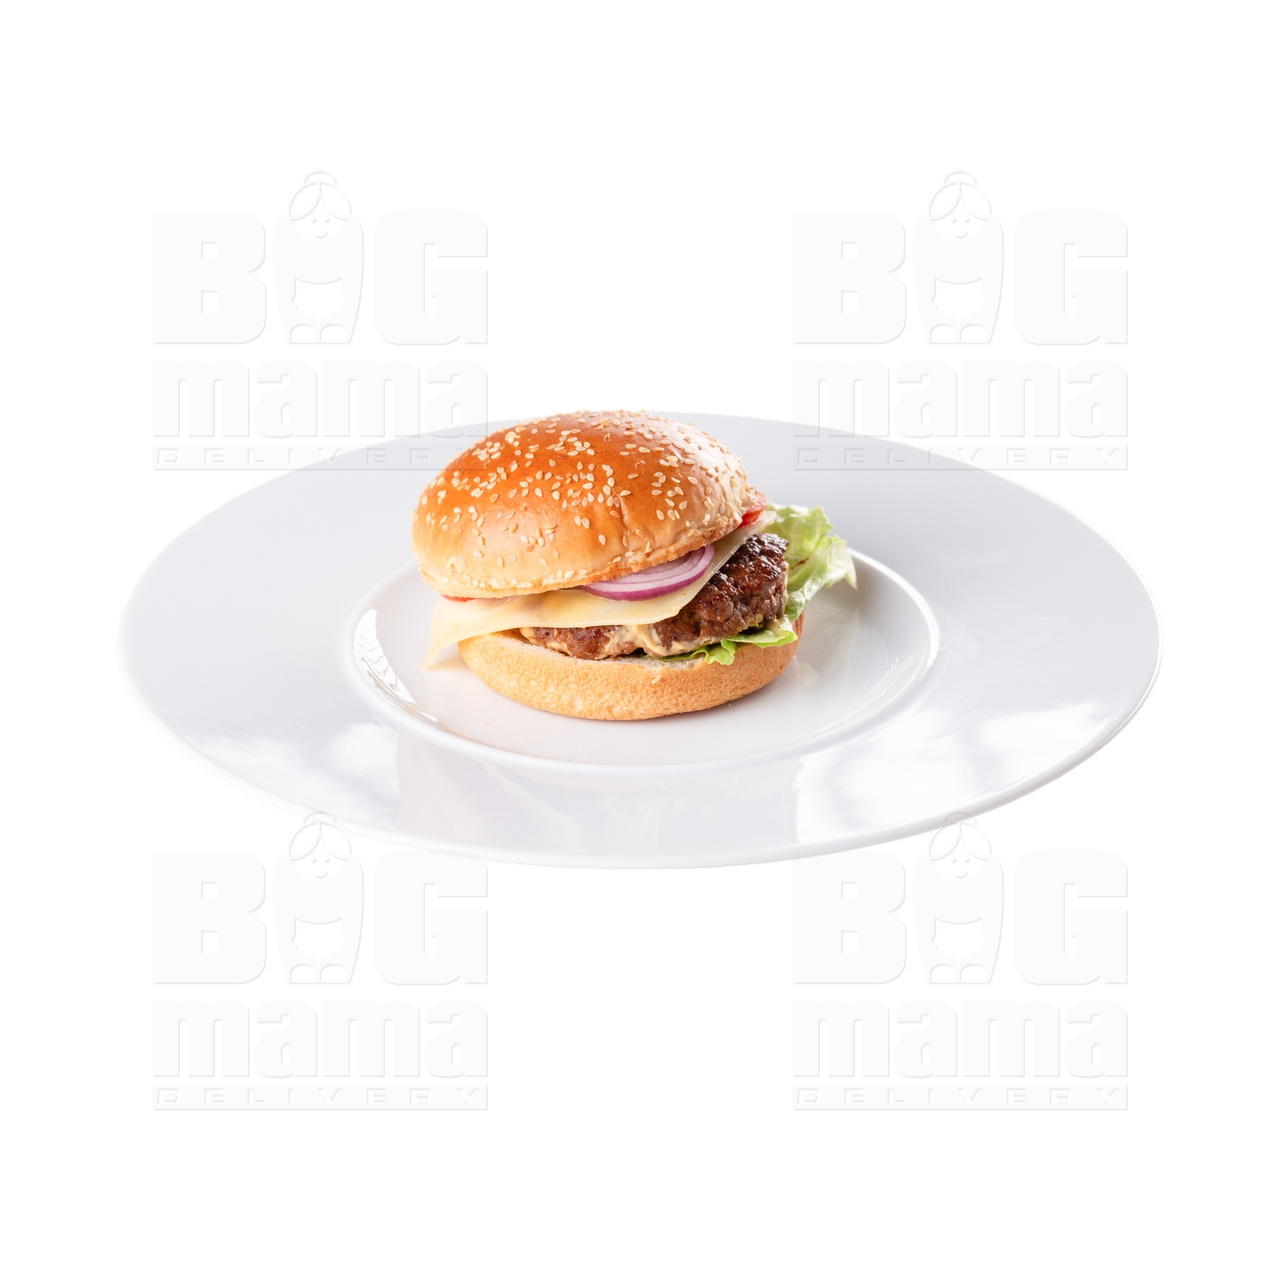 Product #267 image - Mici burger